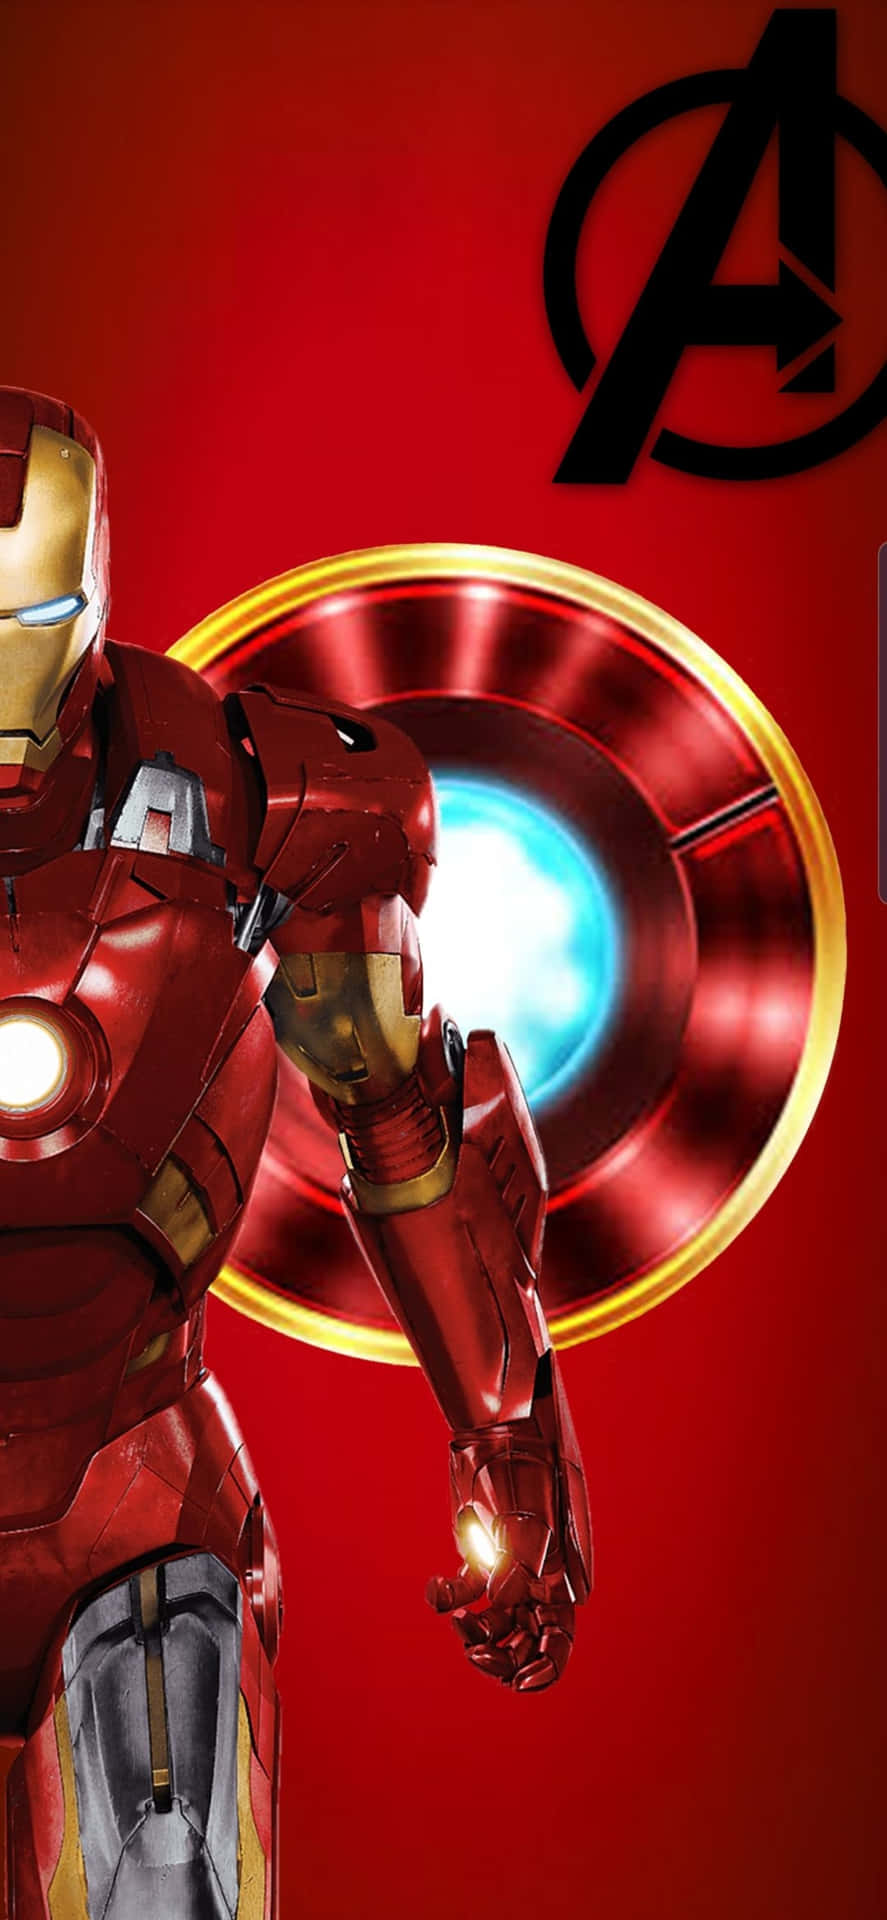 Iphonex Iron Man-bakgrund, Iron Man-bröst Rt-bakgrund.